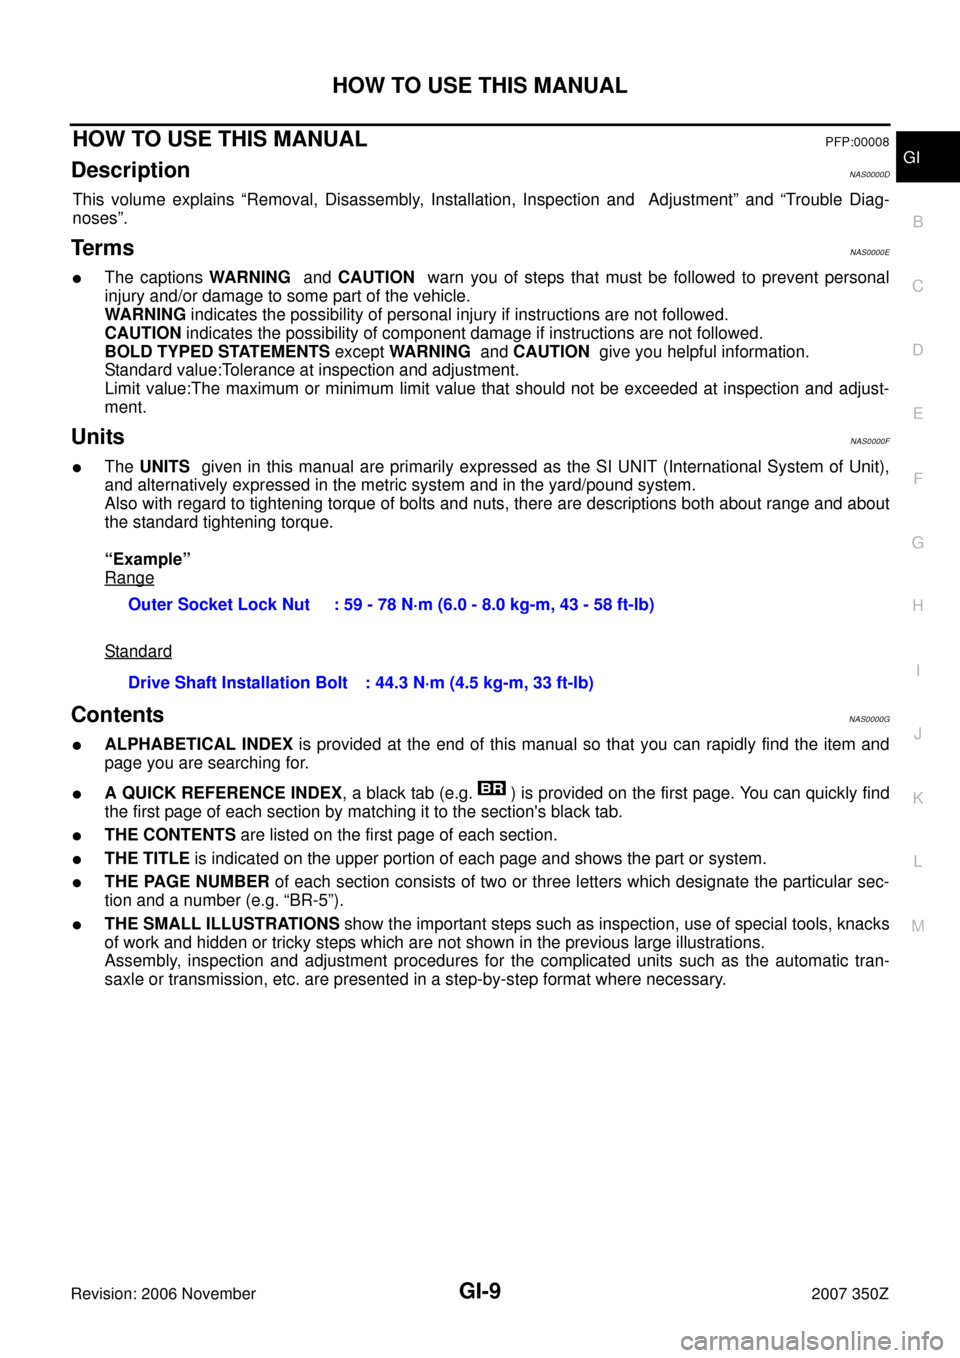 NISSAN 350Z 2007 Z33 General Information Workshop Manual HOW TO USE THIS MANUAL
GI-9
C
D
E
F
G
H
I
J
K
L
MB
GI
Revision: 2006 November2007 350Z
HOW TO USE THIS MANUALPFP:00008
Description NAS0000D
This volume explains “Removal, Disassembly, Installation, 